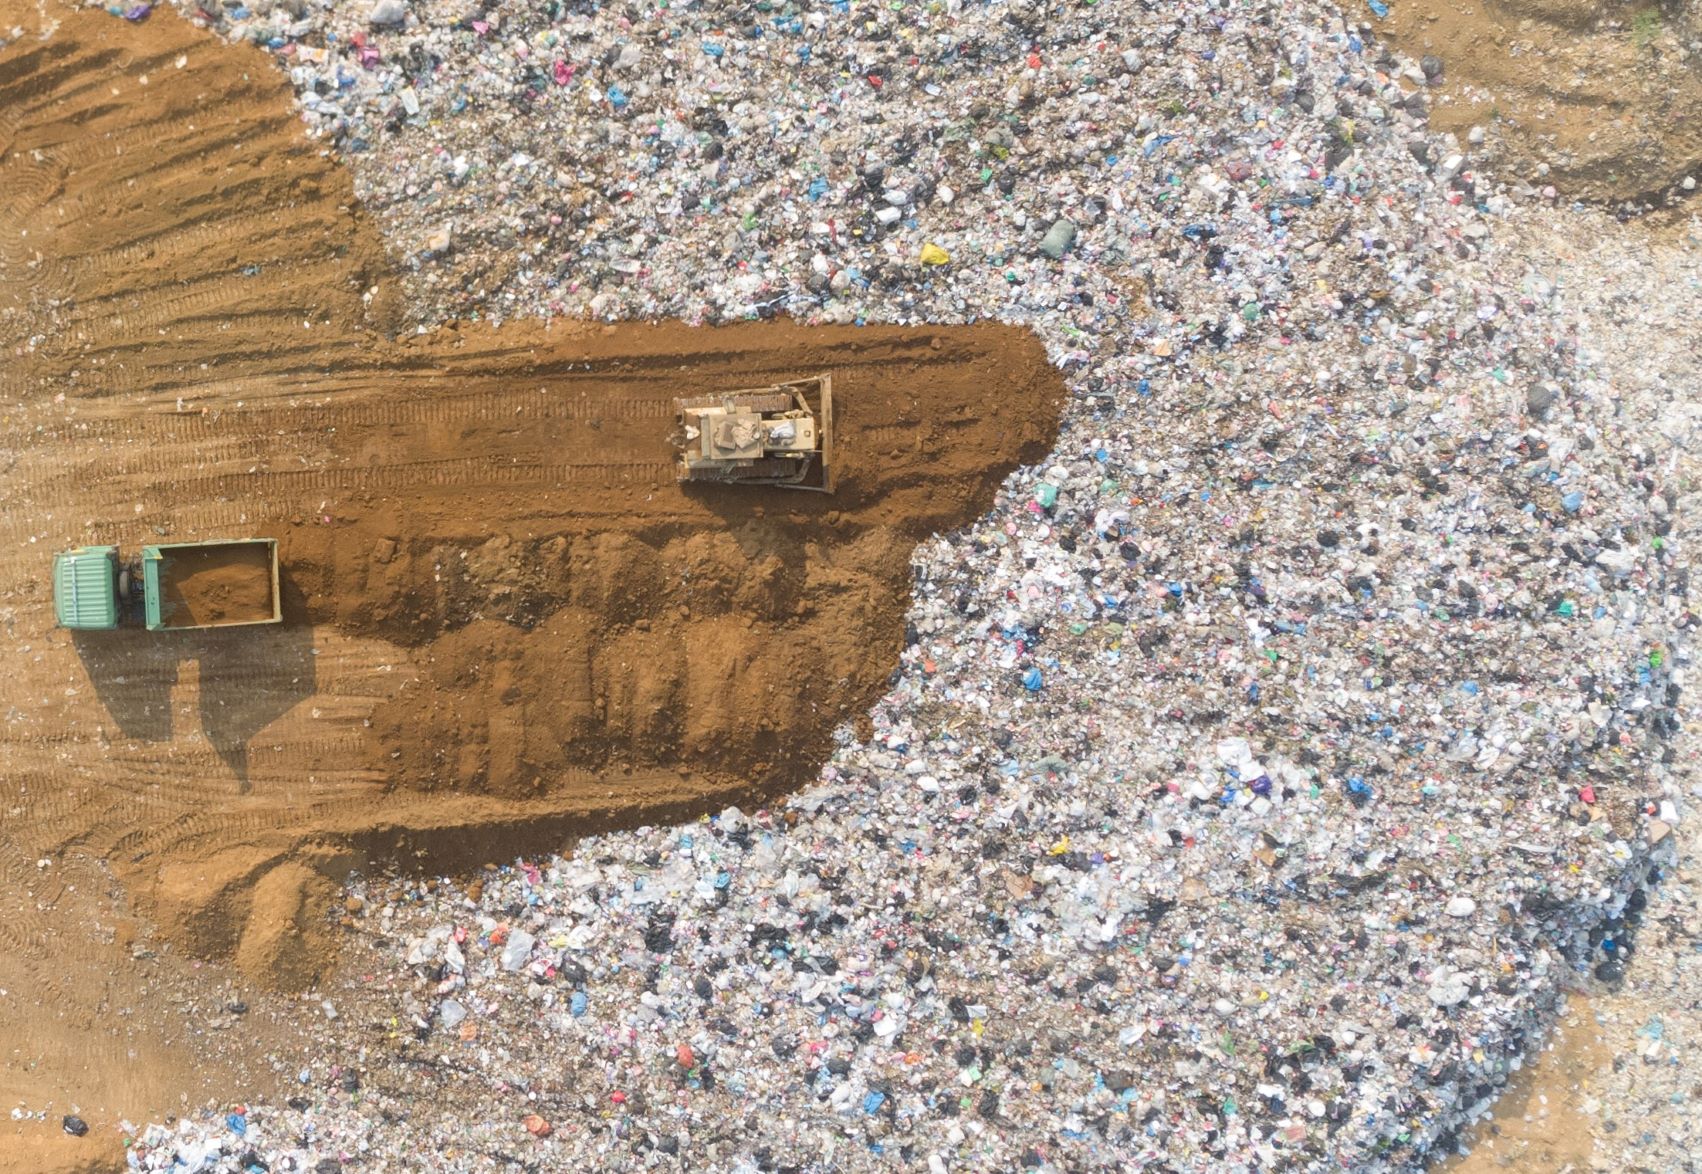 Landfill Survey UAE